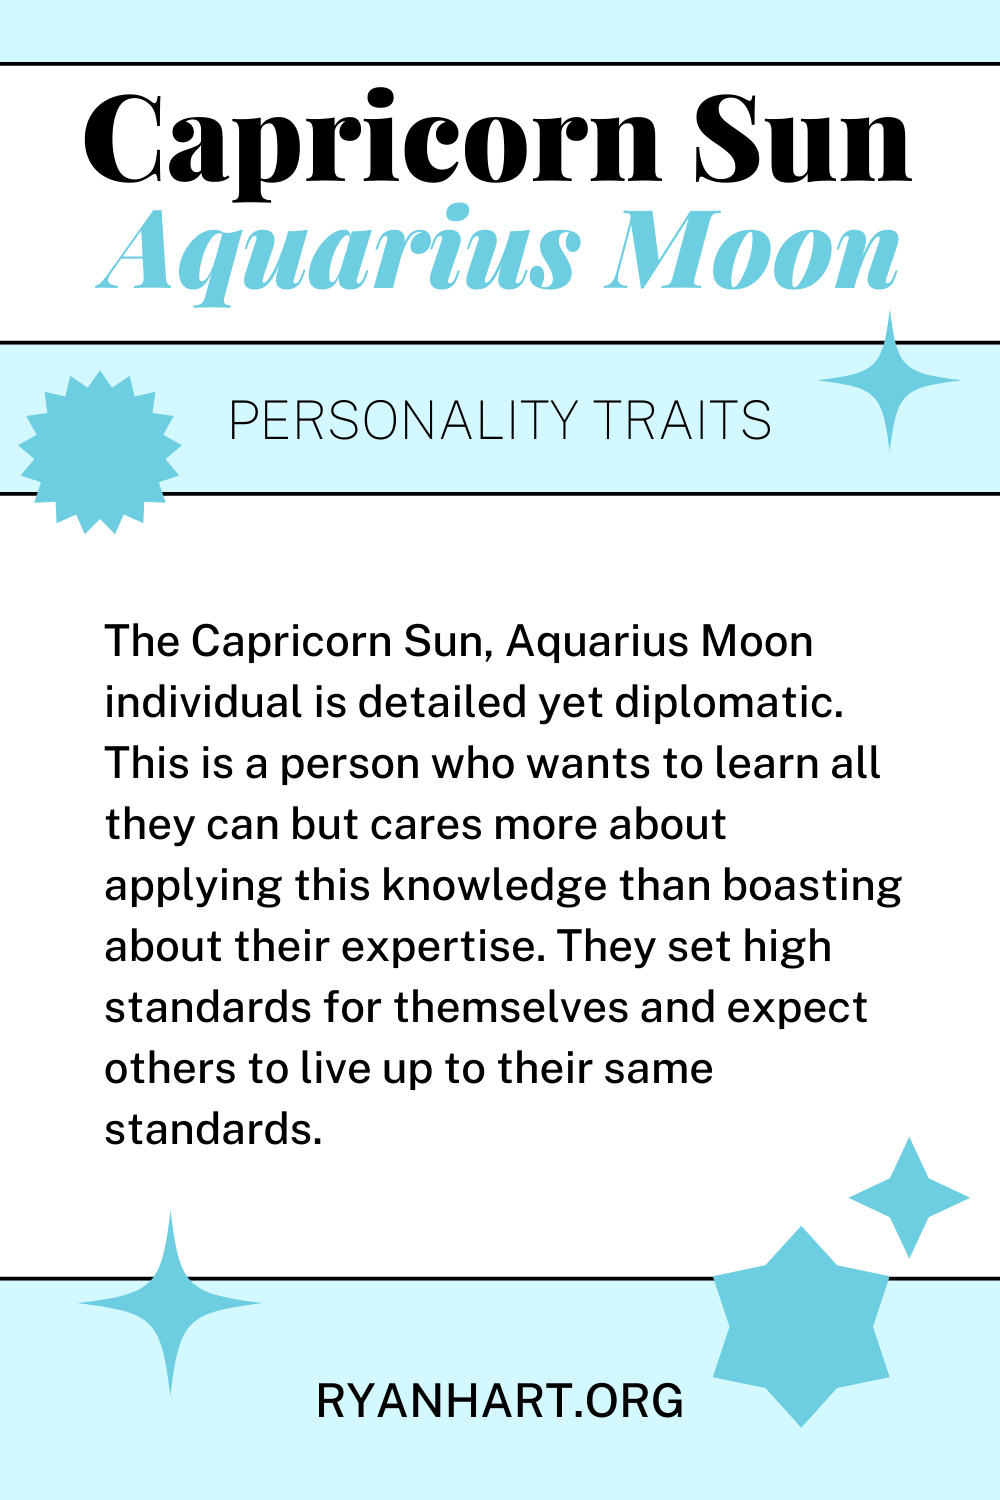 Capricorn Sun Aquarius Moon Description